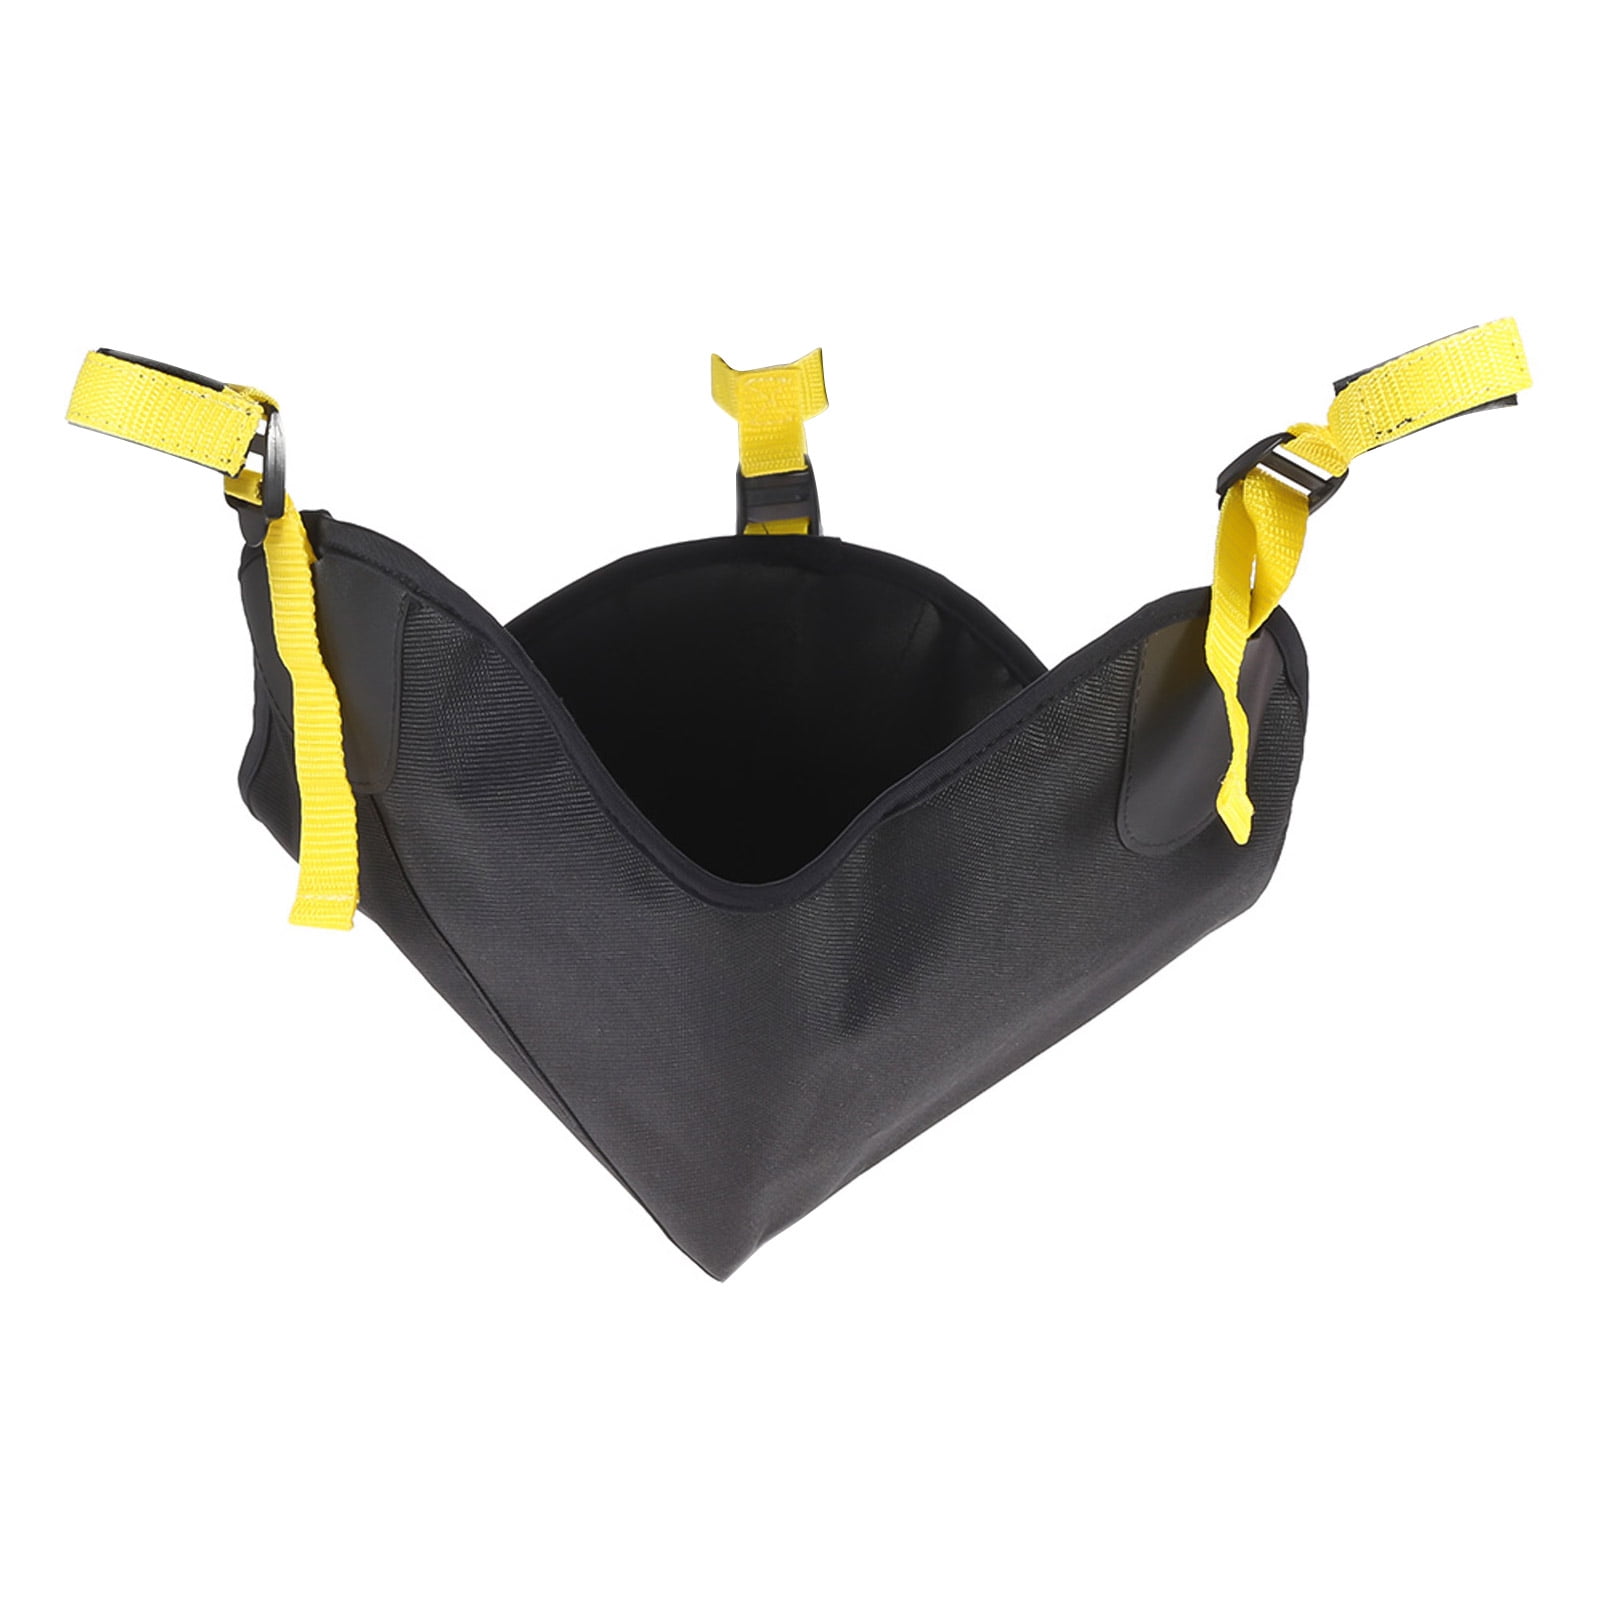 Stripes Sand Bag Sandbag Weight Bags for Studio Video Light Stand Tripod. Vbestlife Yellow & Black Studio Weight Sandbag